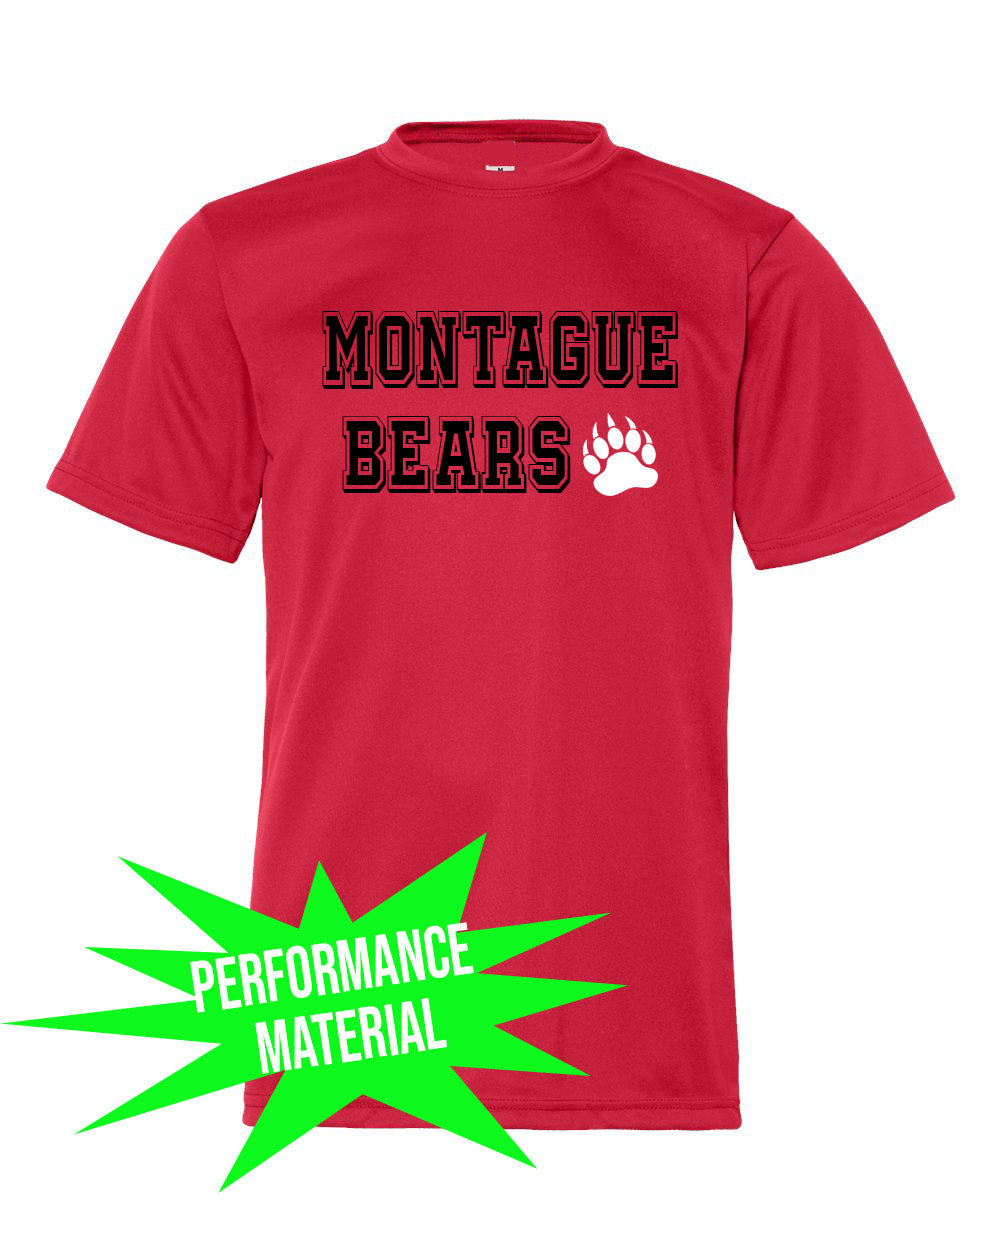 Montague Performance Material Design 6 T-Shirt